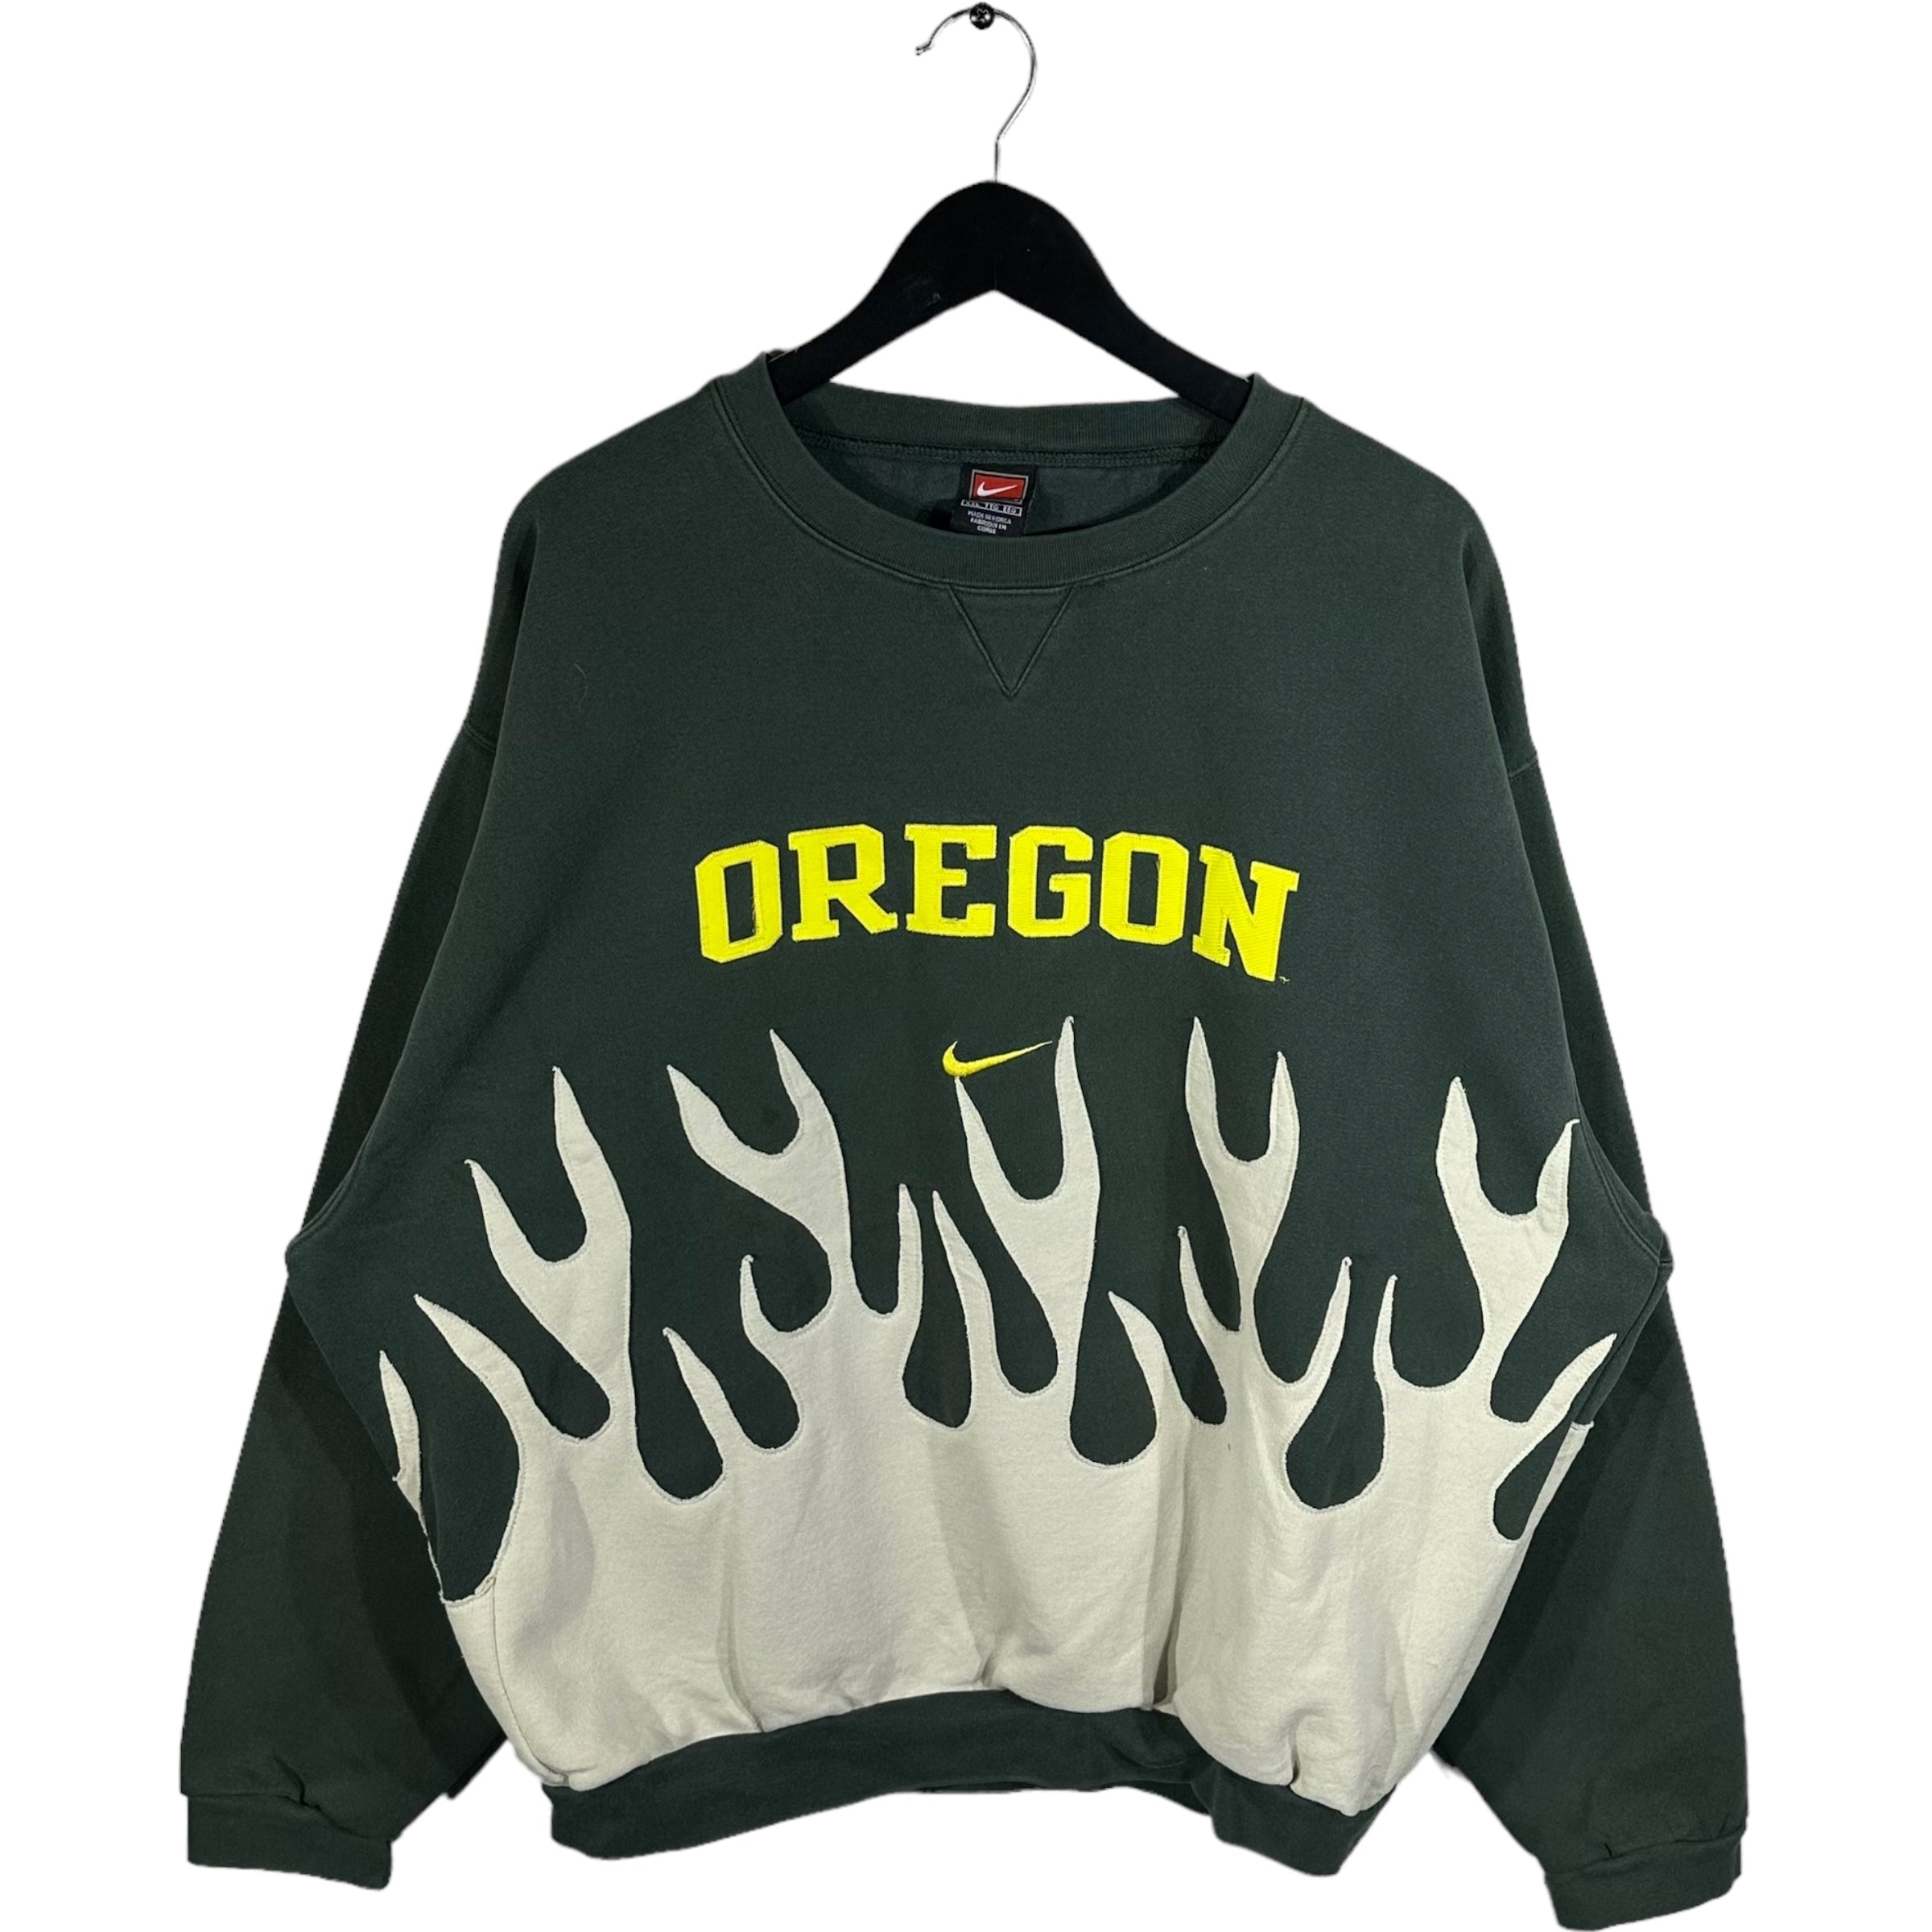 Vintage Flame Cut & Sew Oregon Nike Crewneck